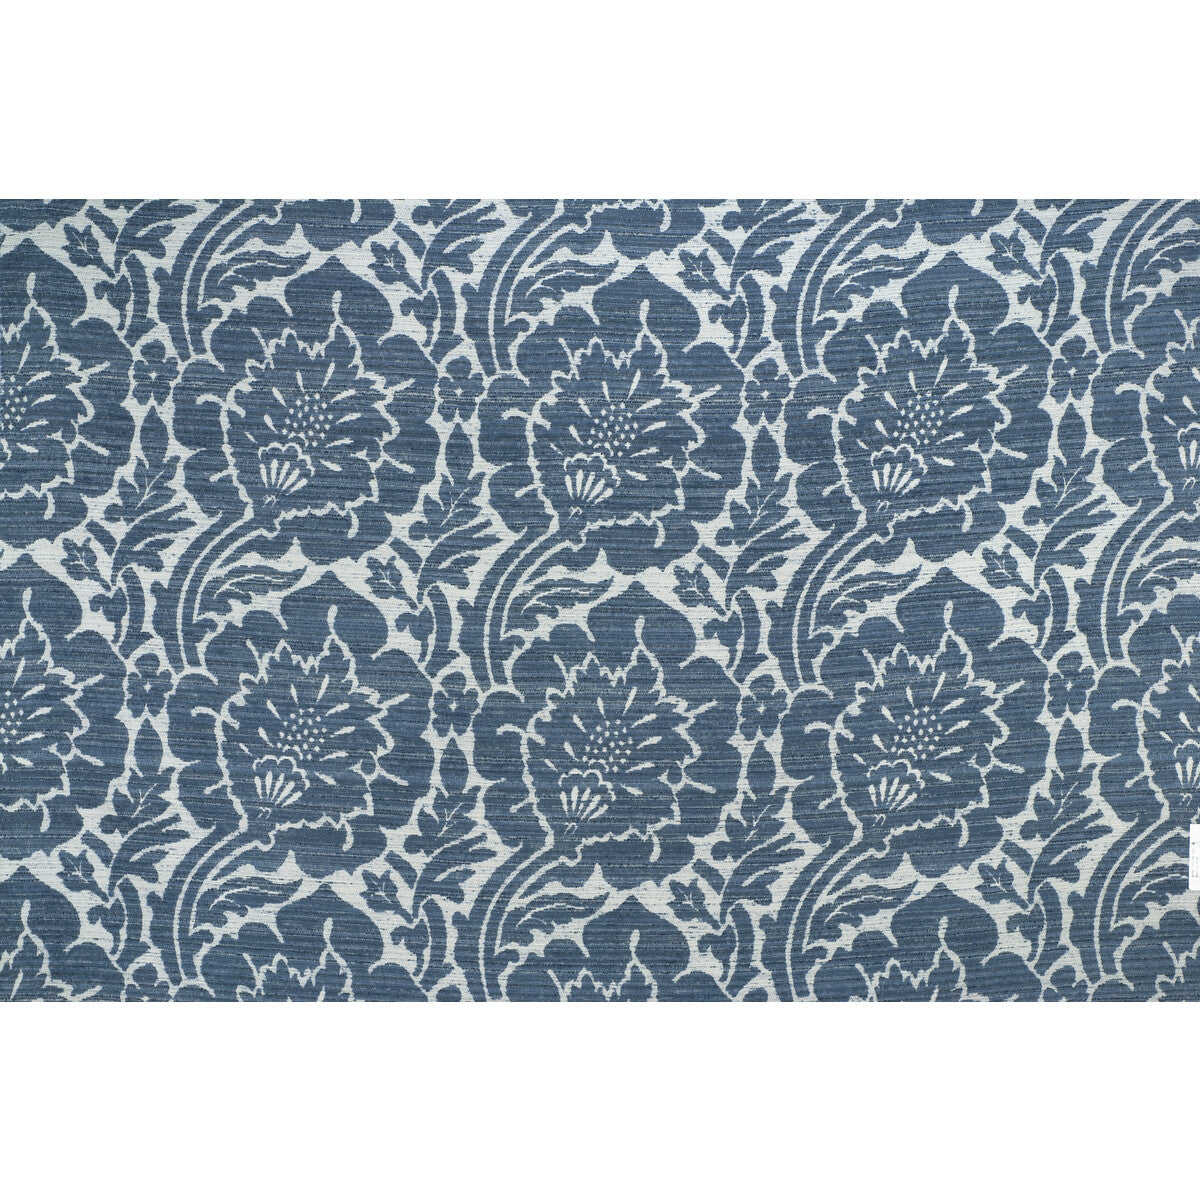 Kravet Design fabric in 34712-5 color - pattern 34712.5.0 - by Kravet Design in the Gis collection